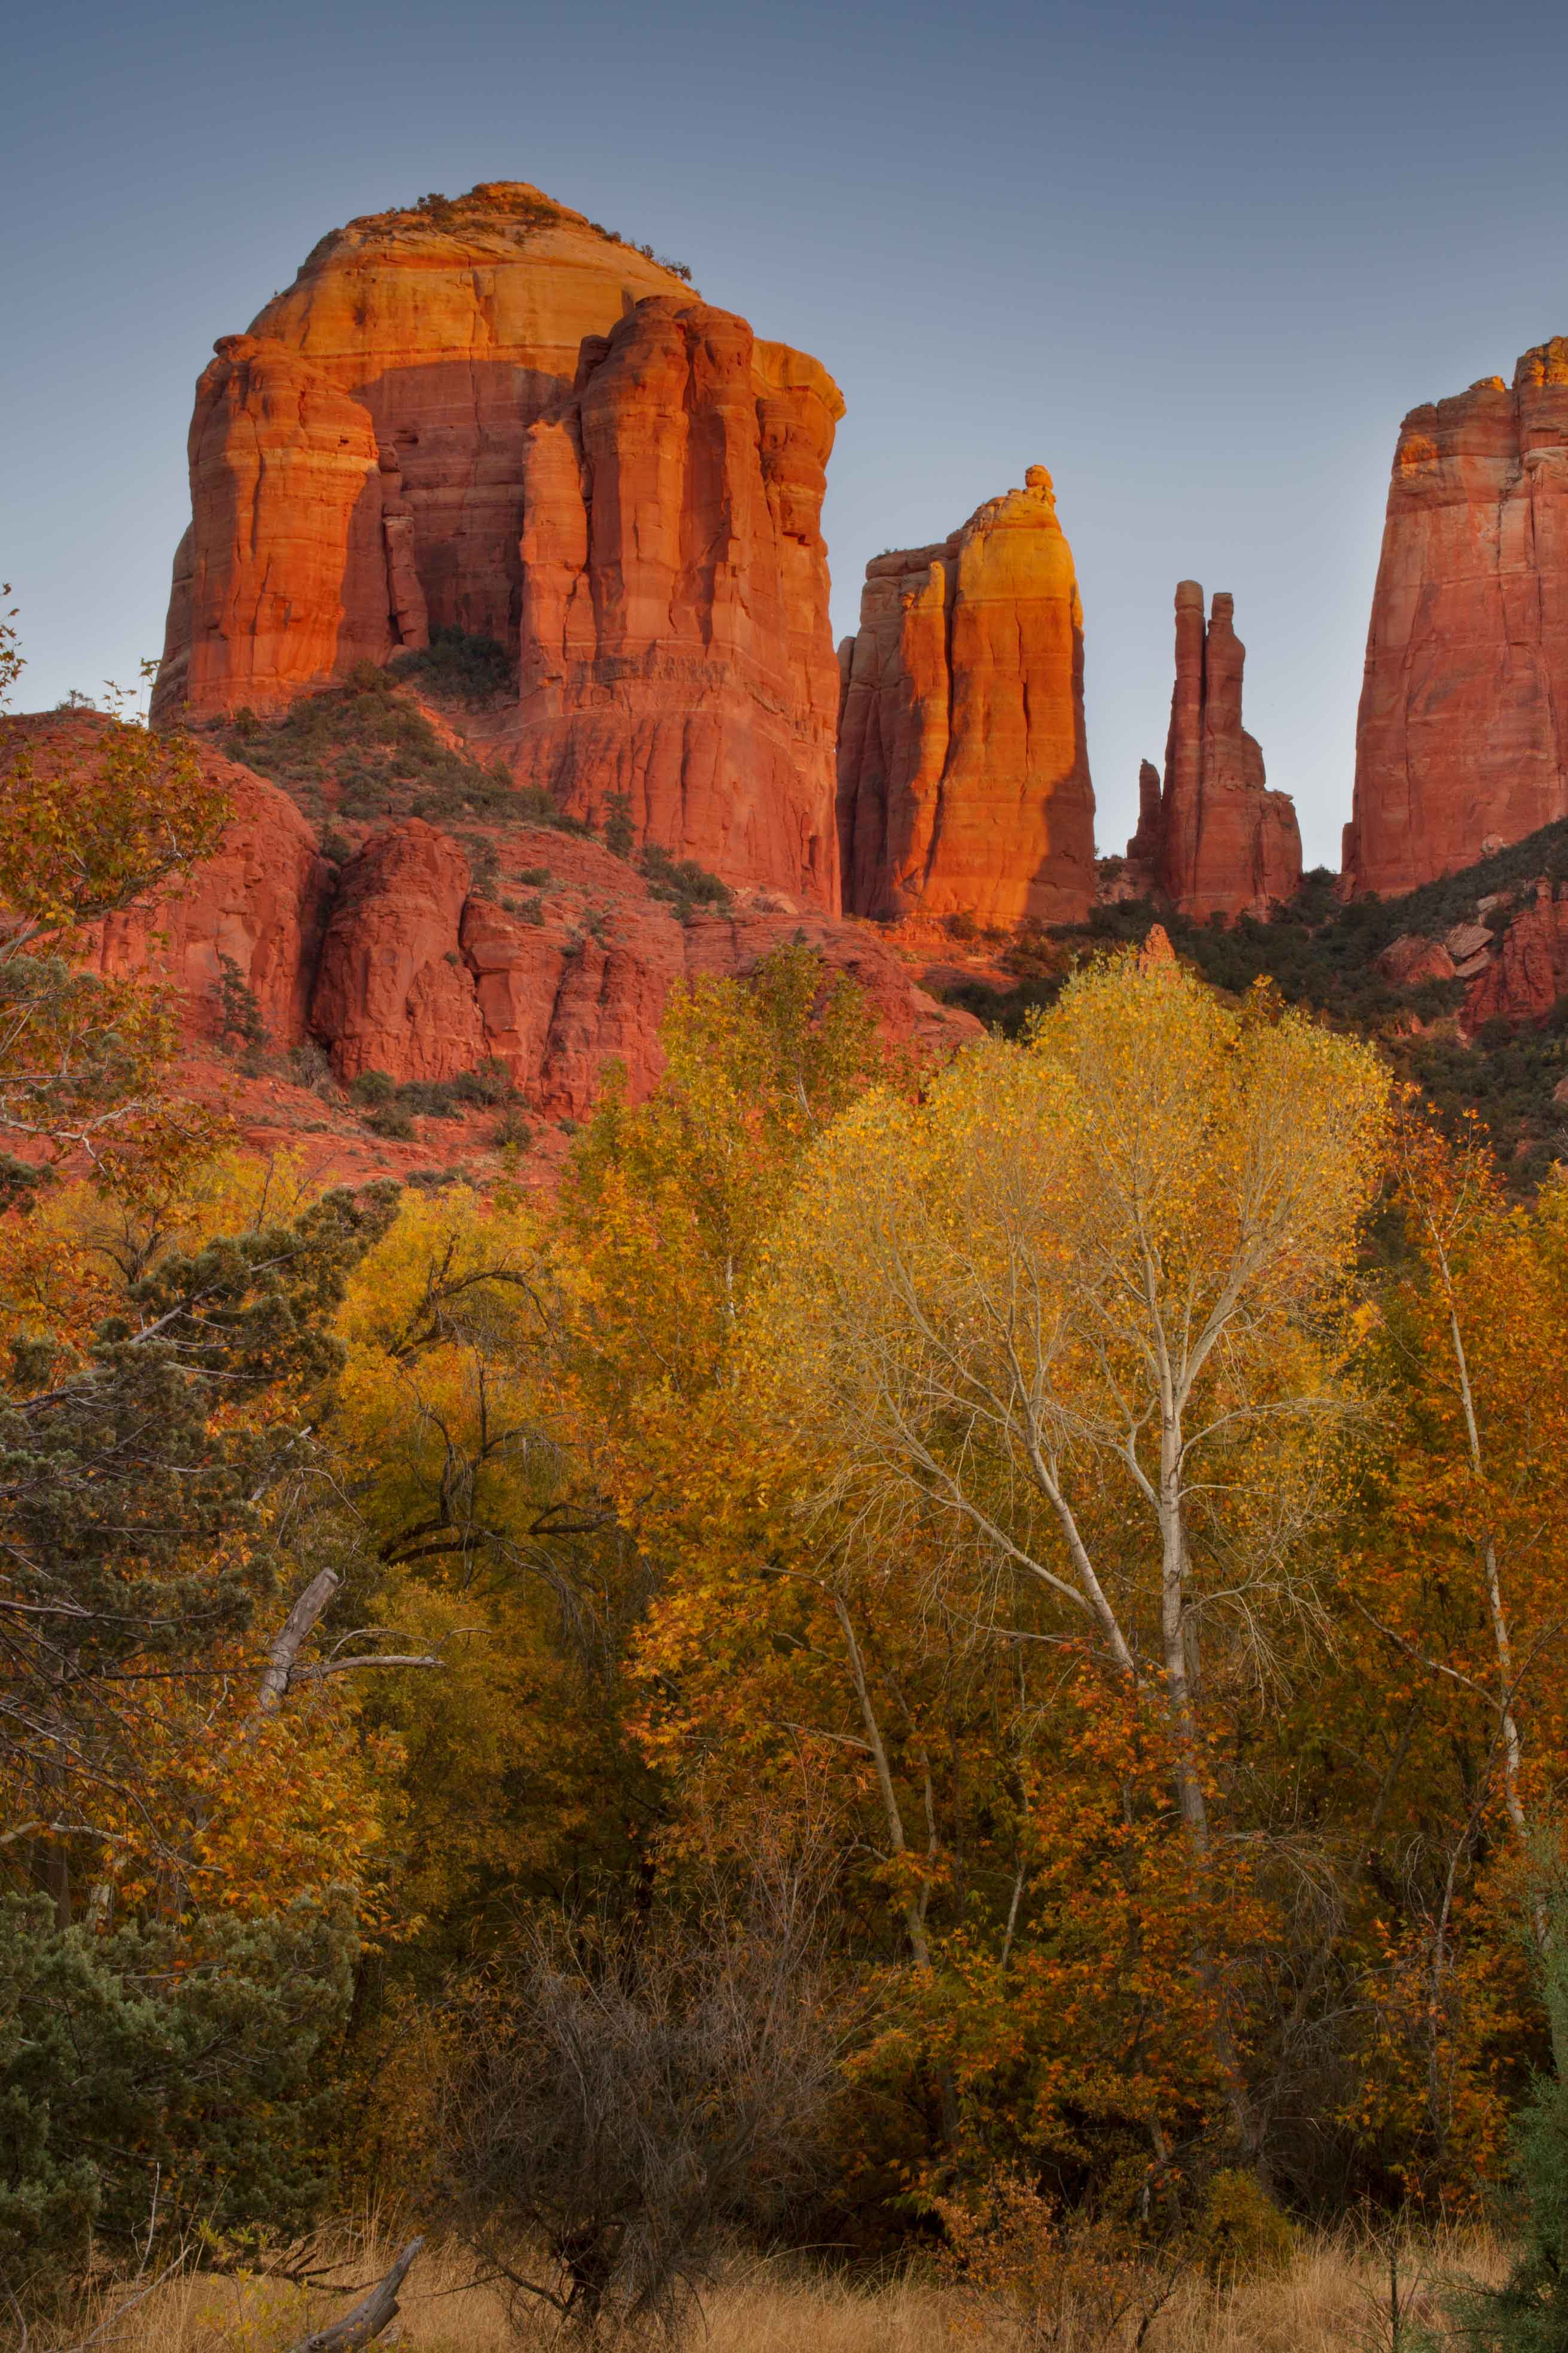 Trees with fall colors beneath Cathedral Rock, Arizona (near Sedona)